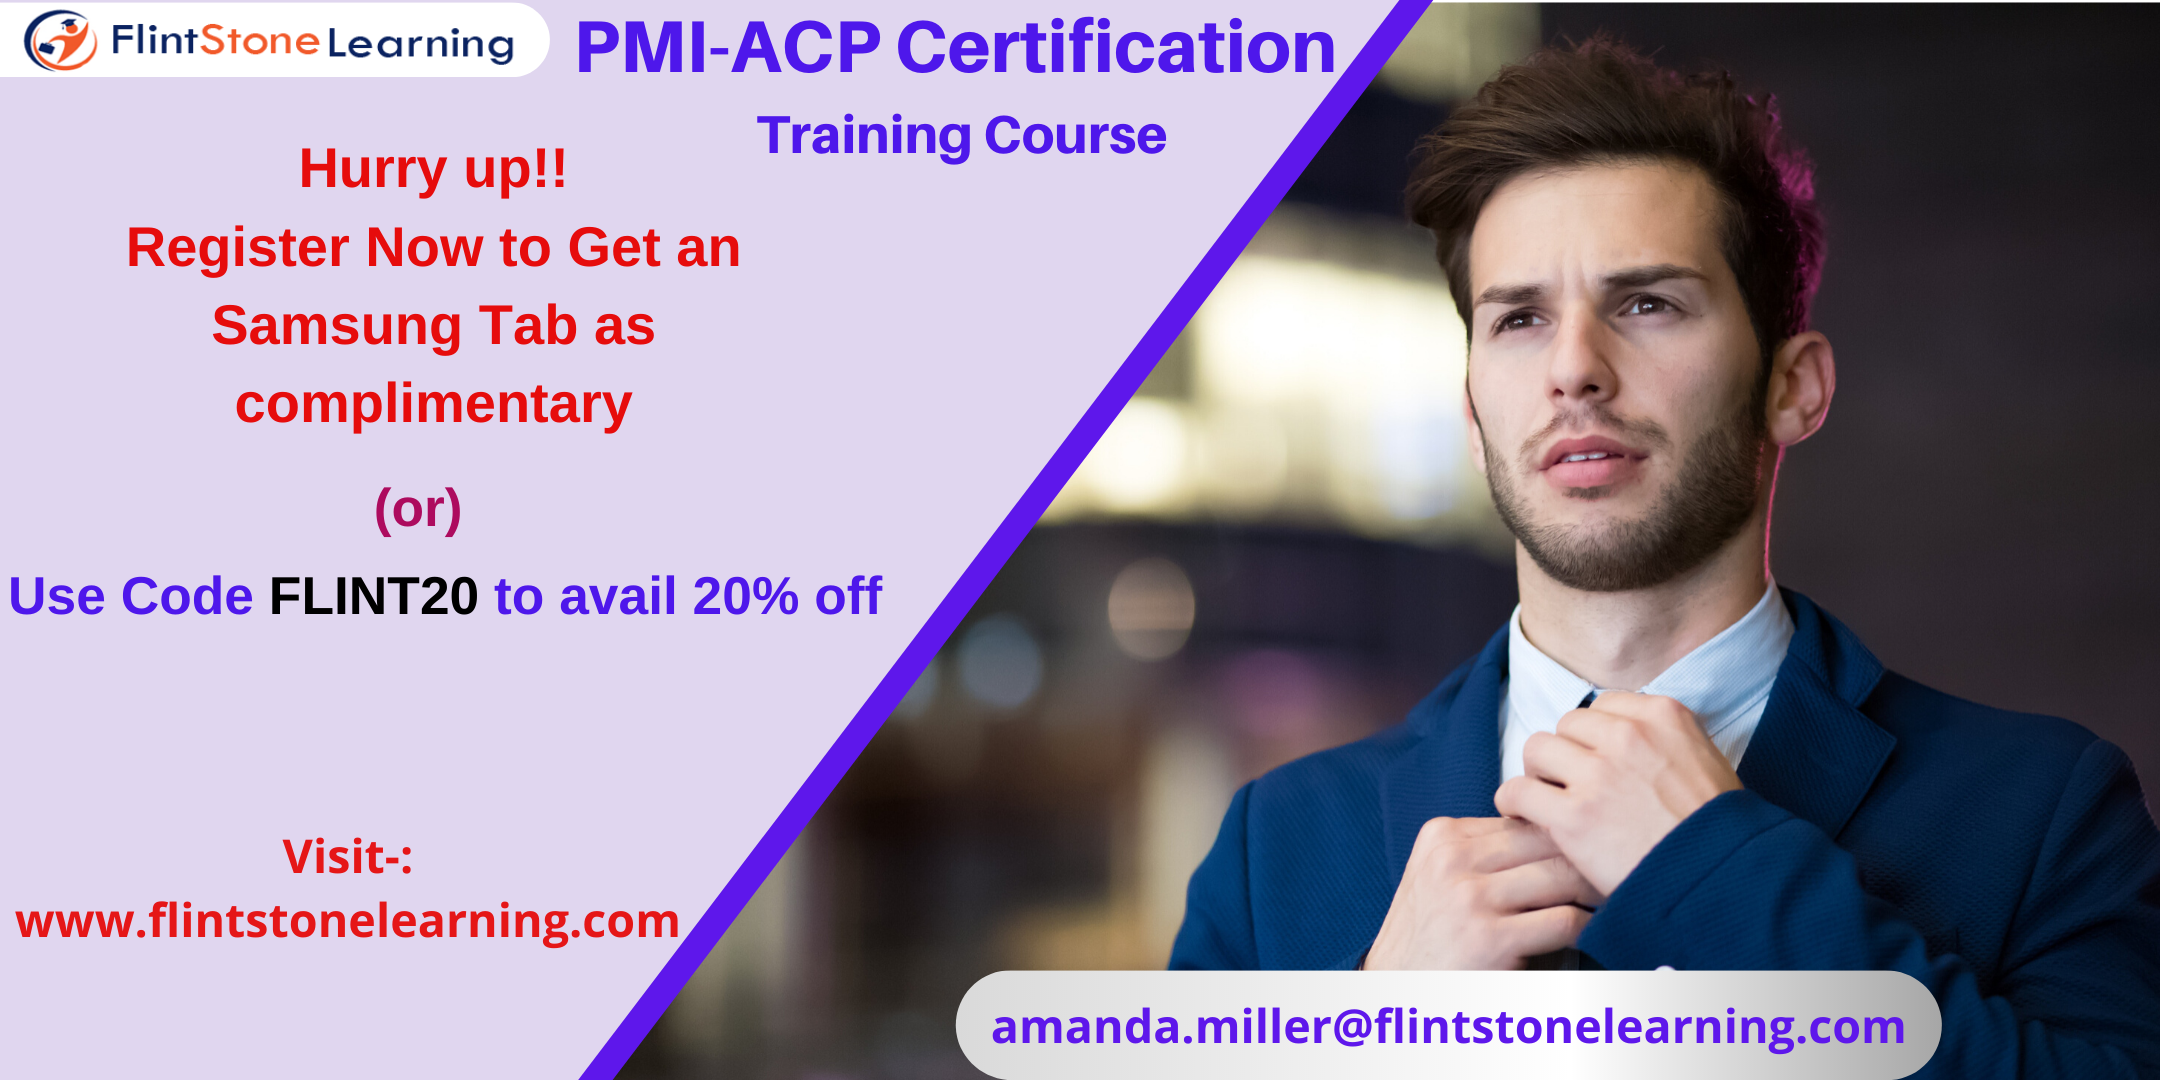 PMI-ACP Certification Training Course in Arlington, WA